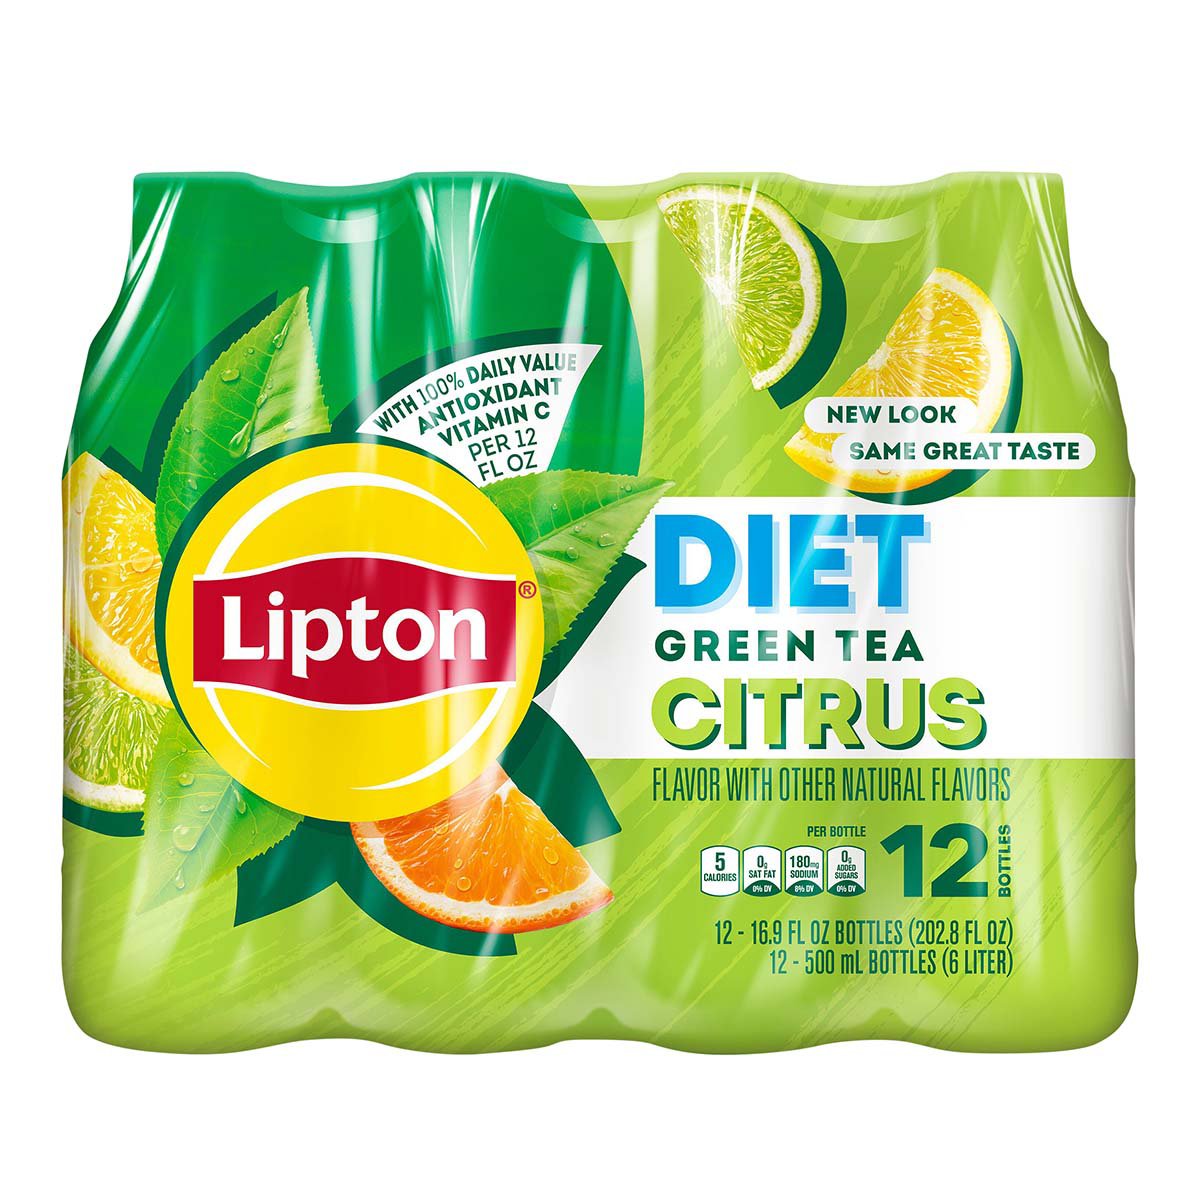 Lipton Diet Green Tea Mixed Berry 16.9 Fl Oz 12 Count Bottle